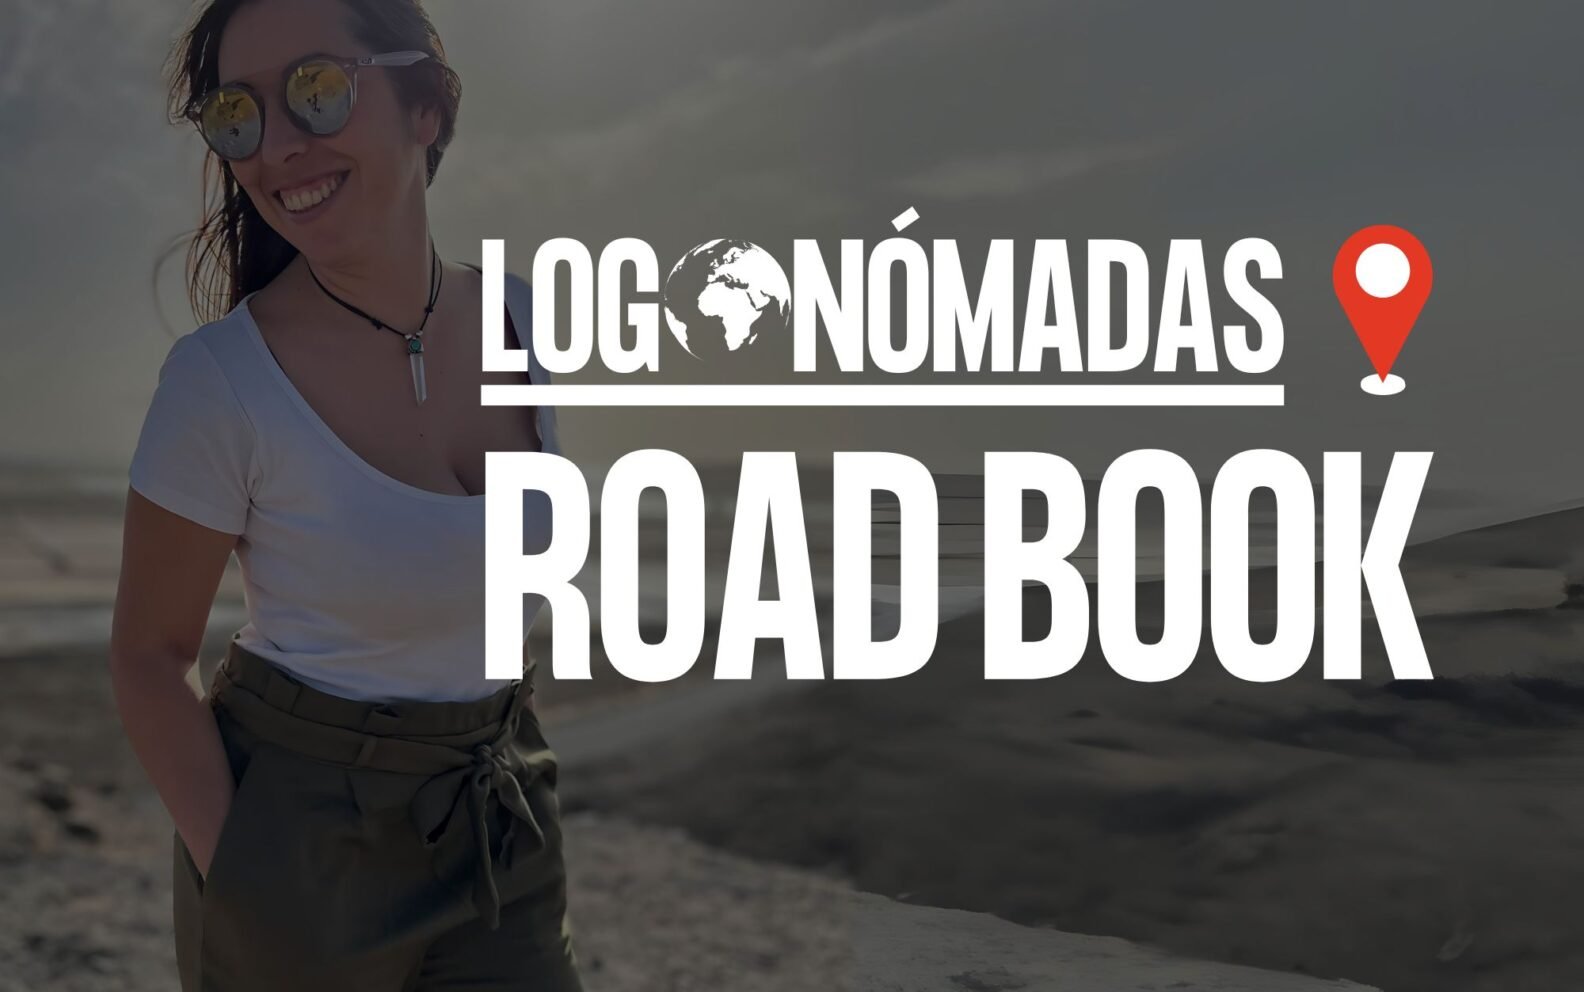 logonomadas-road-book-logopeda-emprendedora-crecimiento-exito